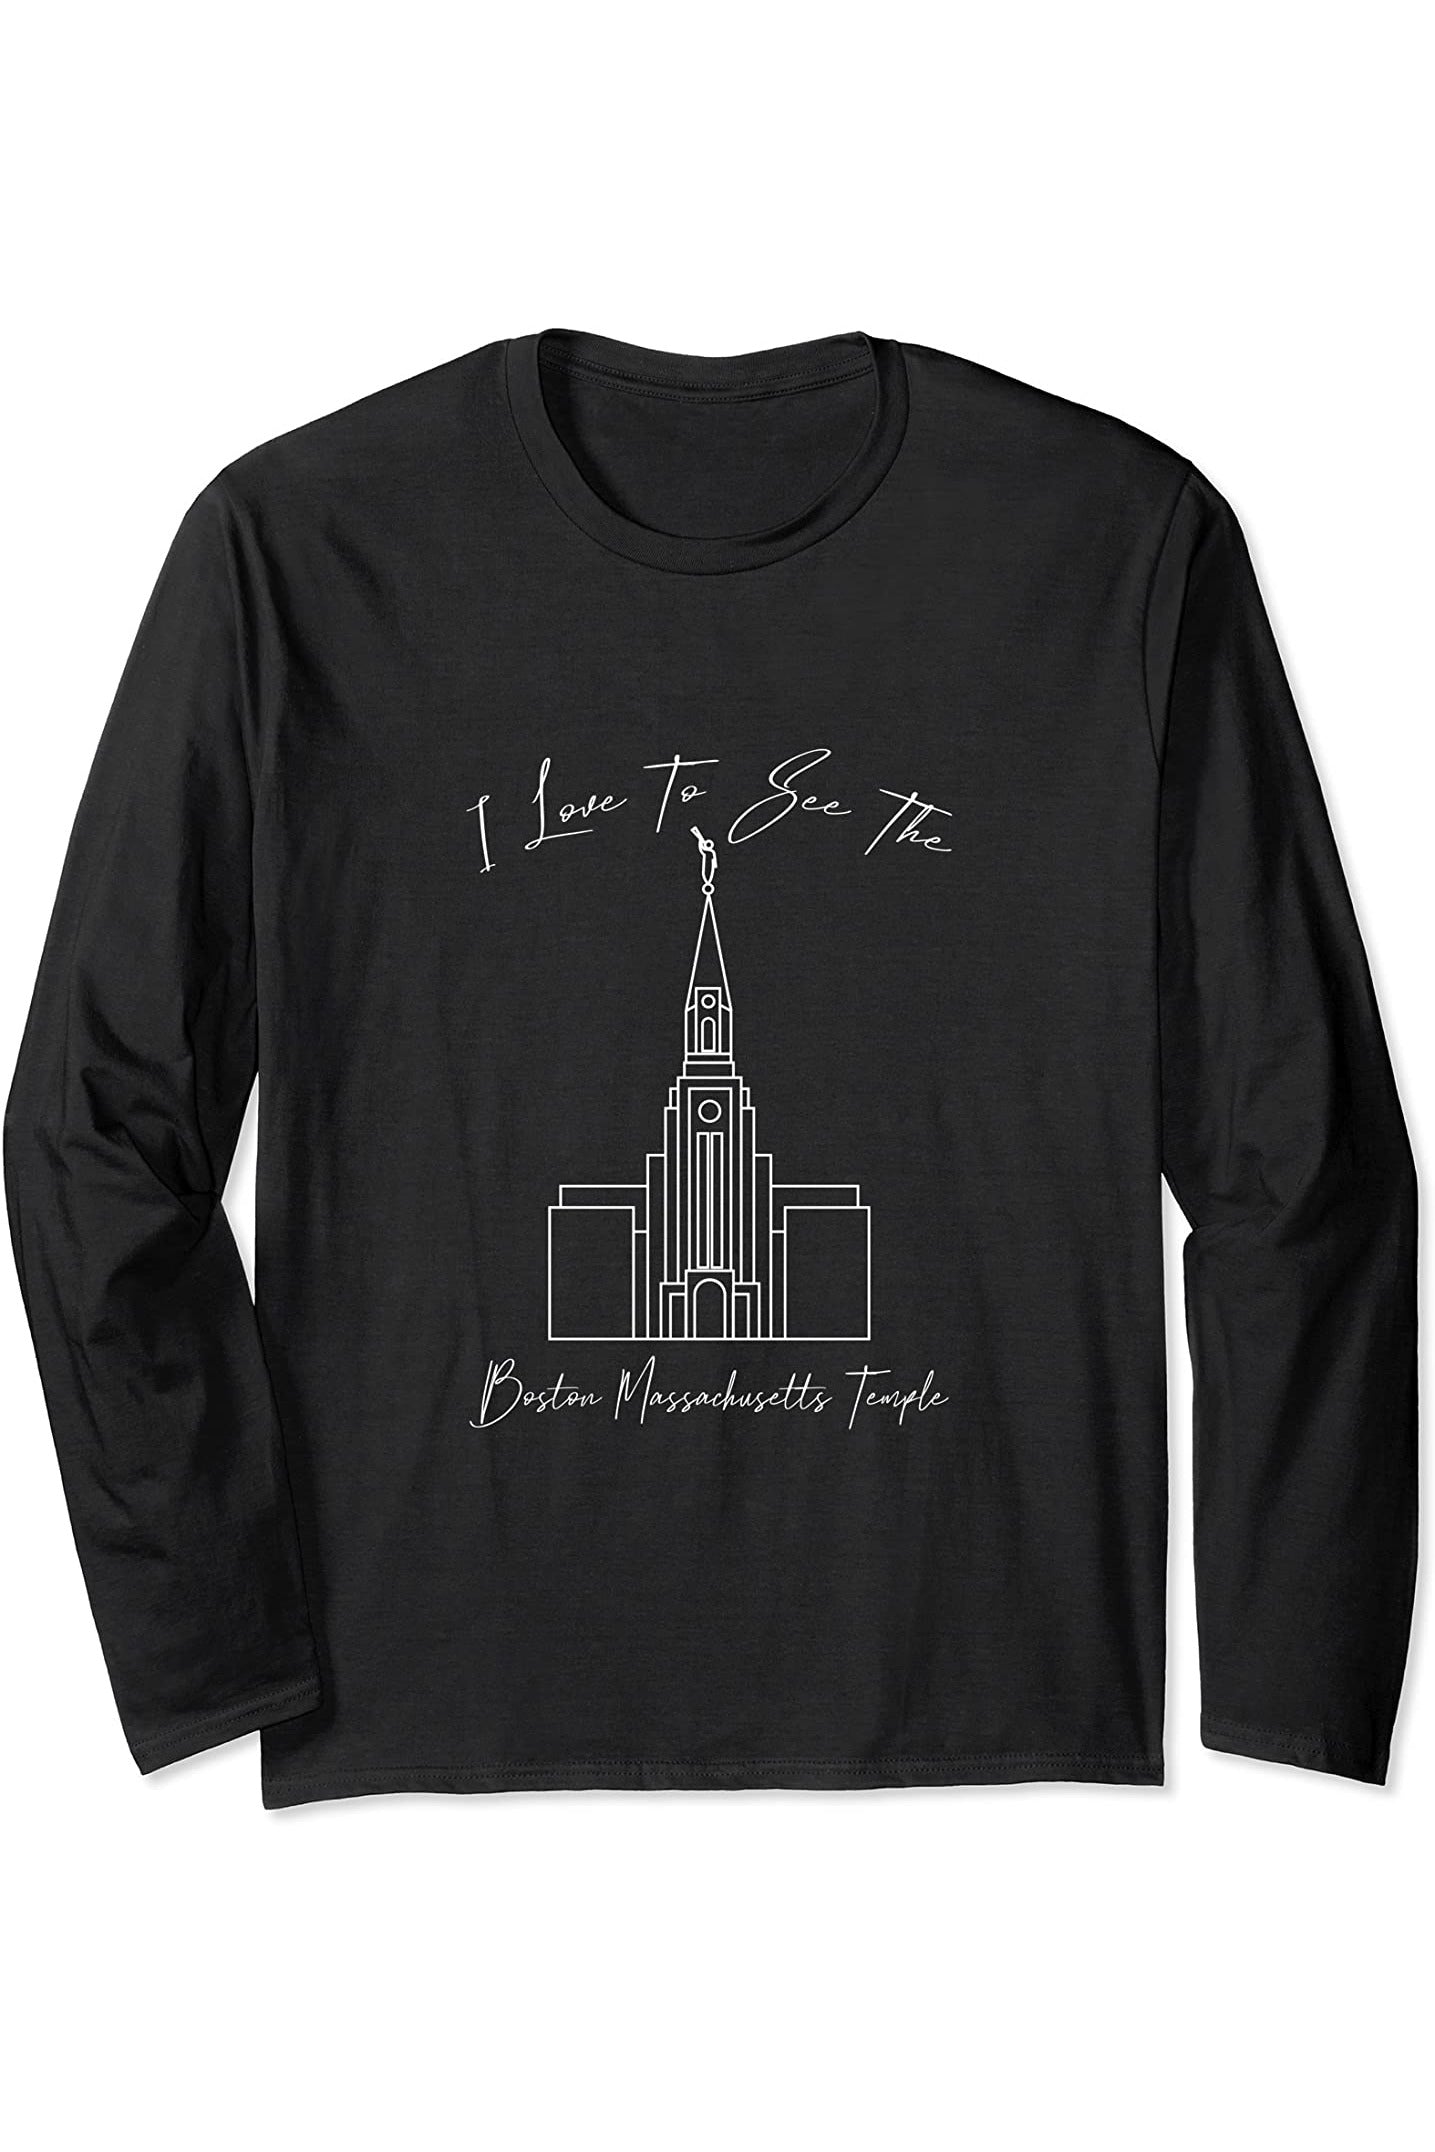 Boston Massachusetts Temple Long Sleeve T-Shirt - Calligraphy Style (English) US